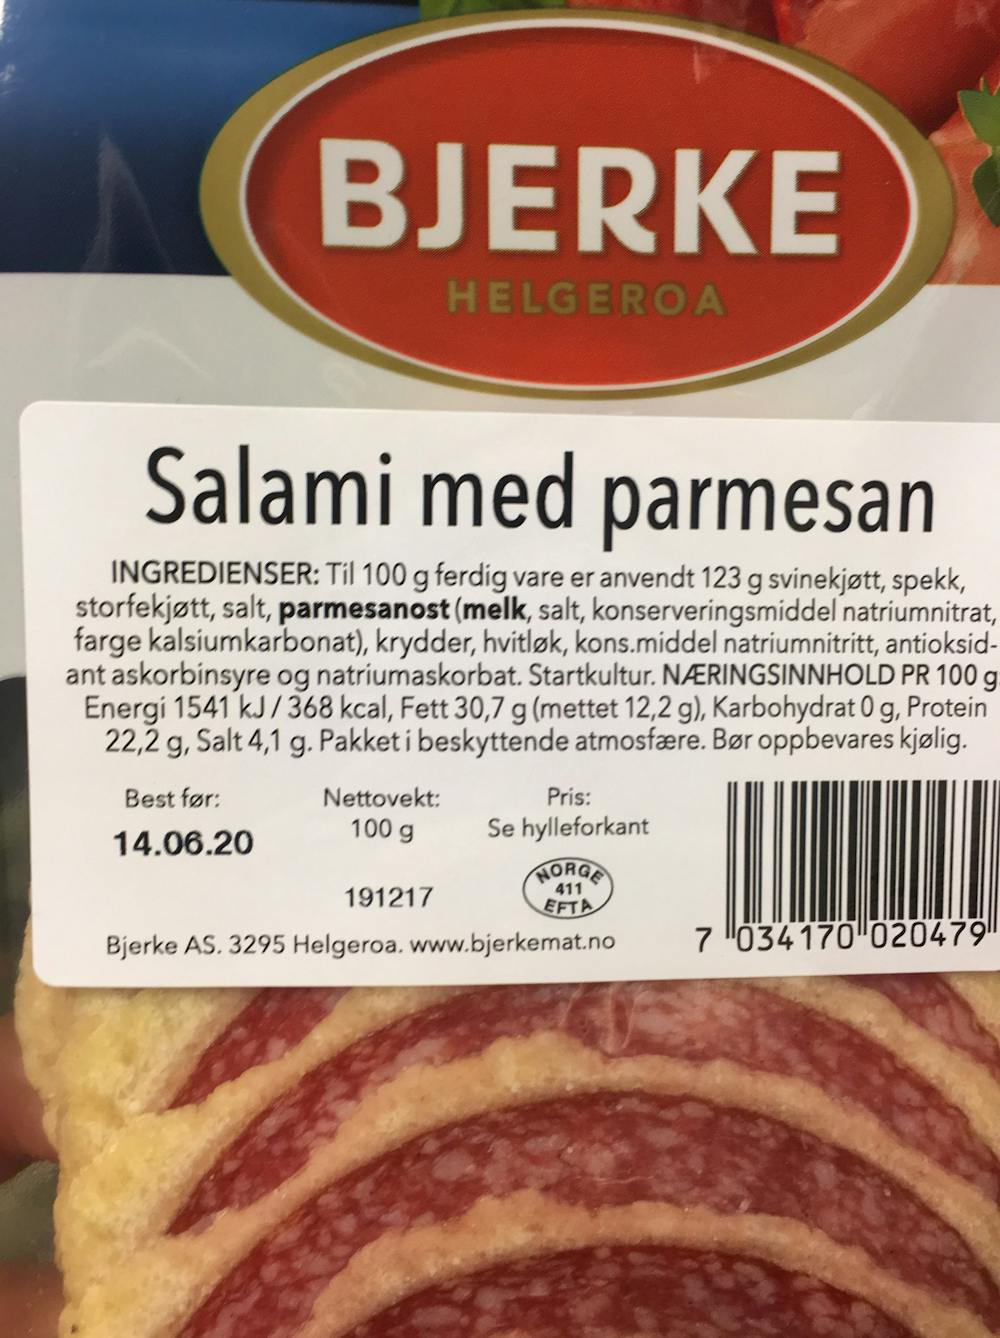 Ingredienslisten til Salami med parmesan, Bjerke